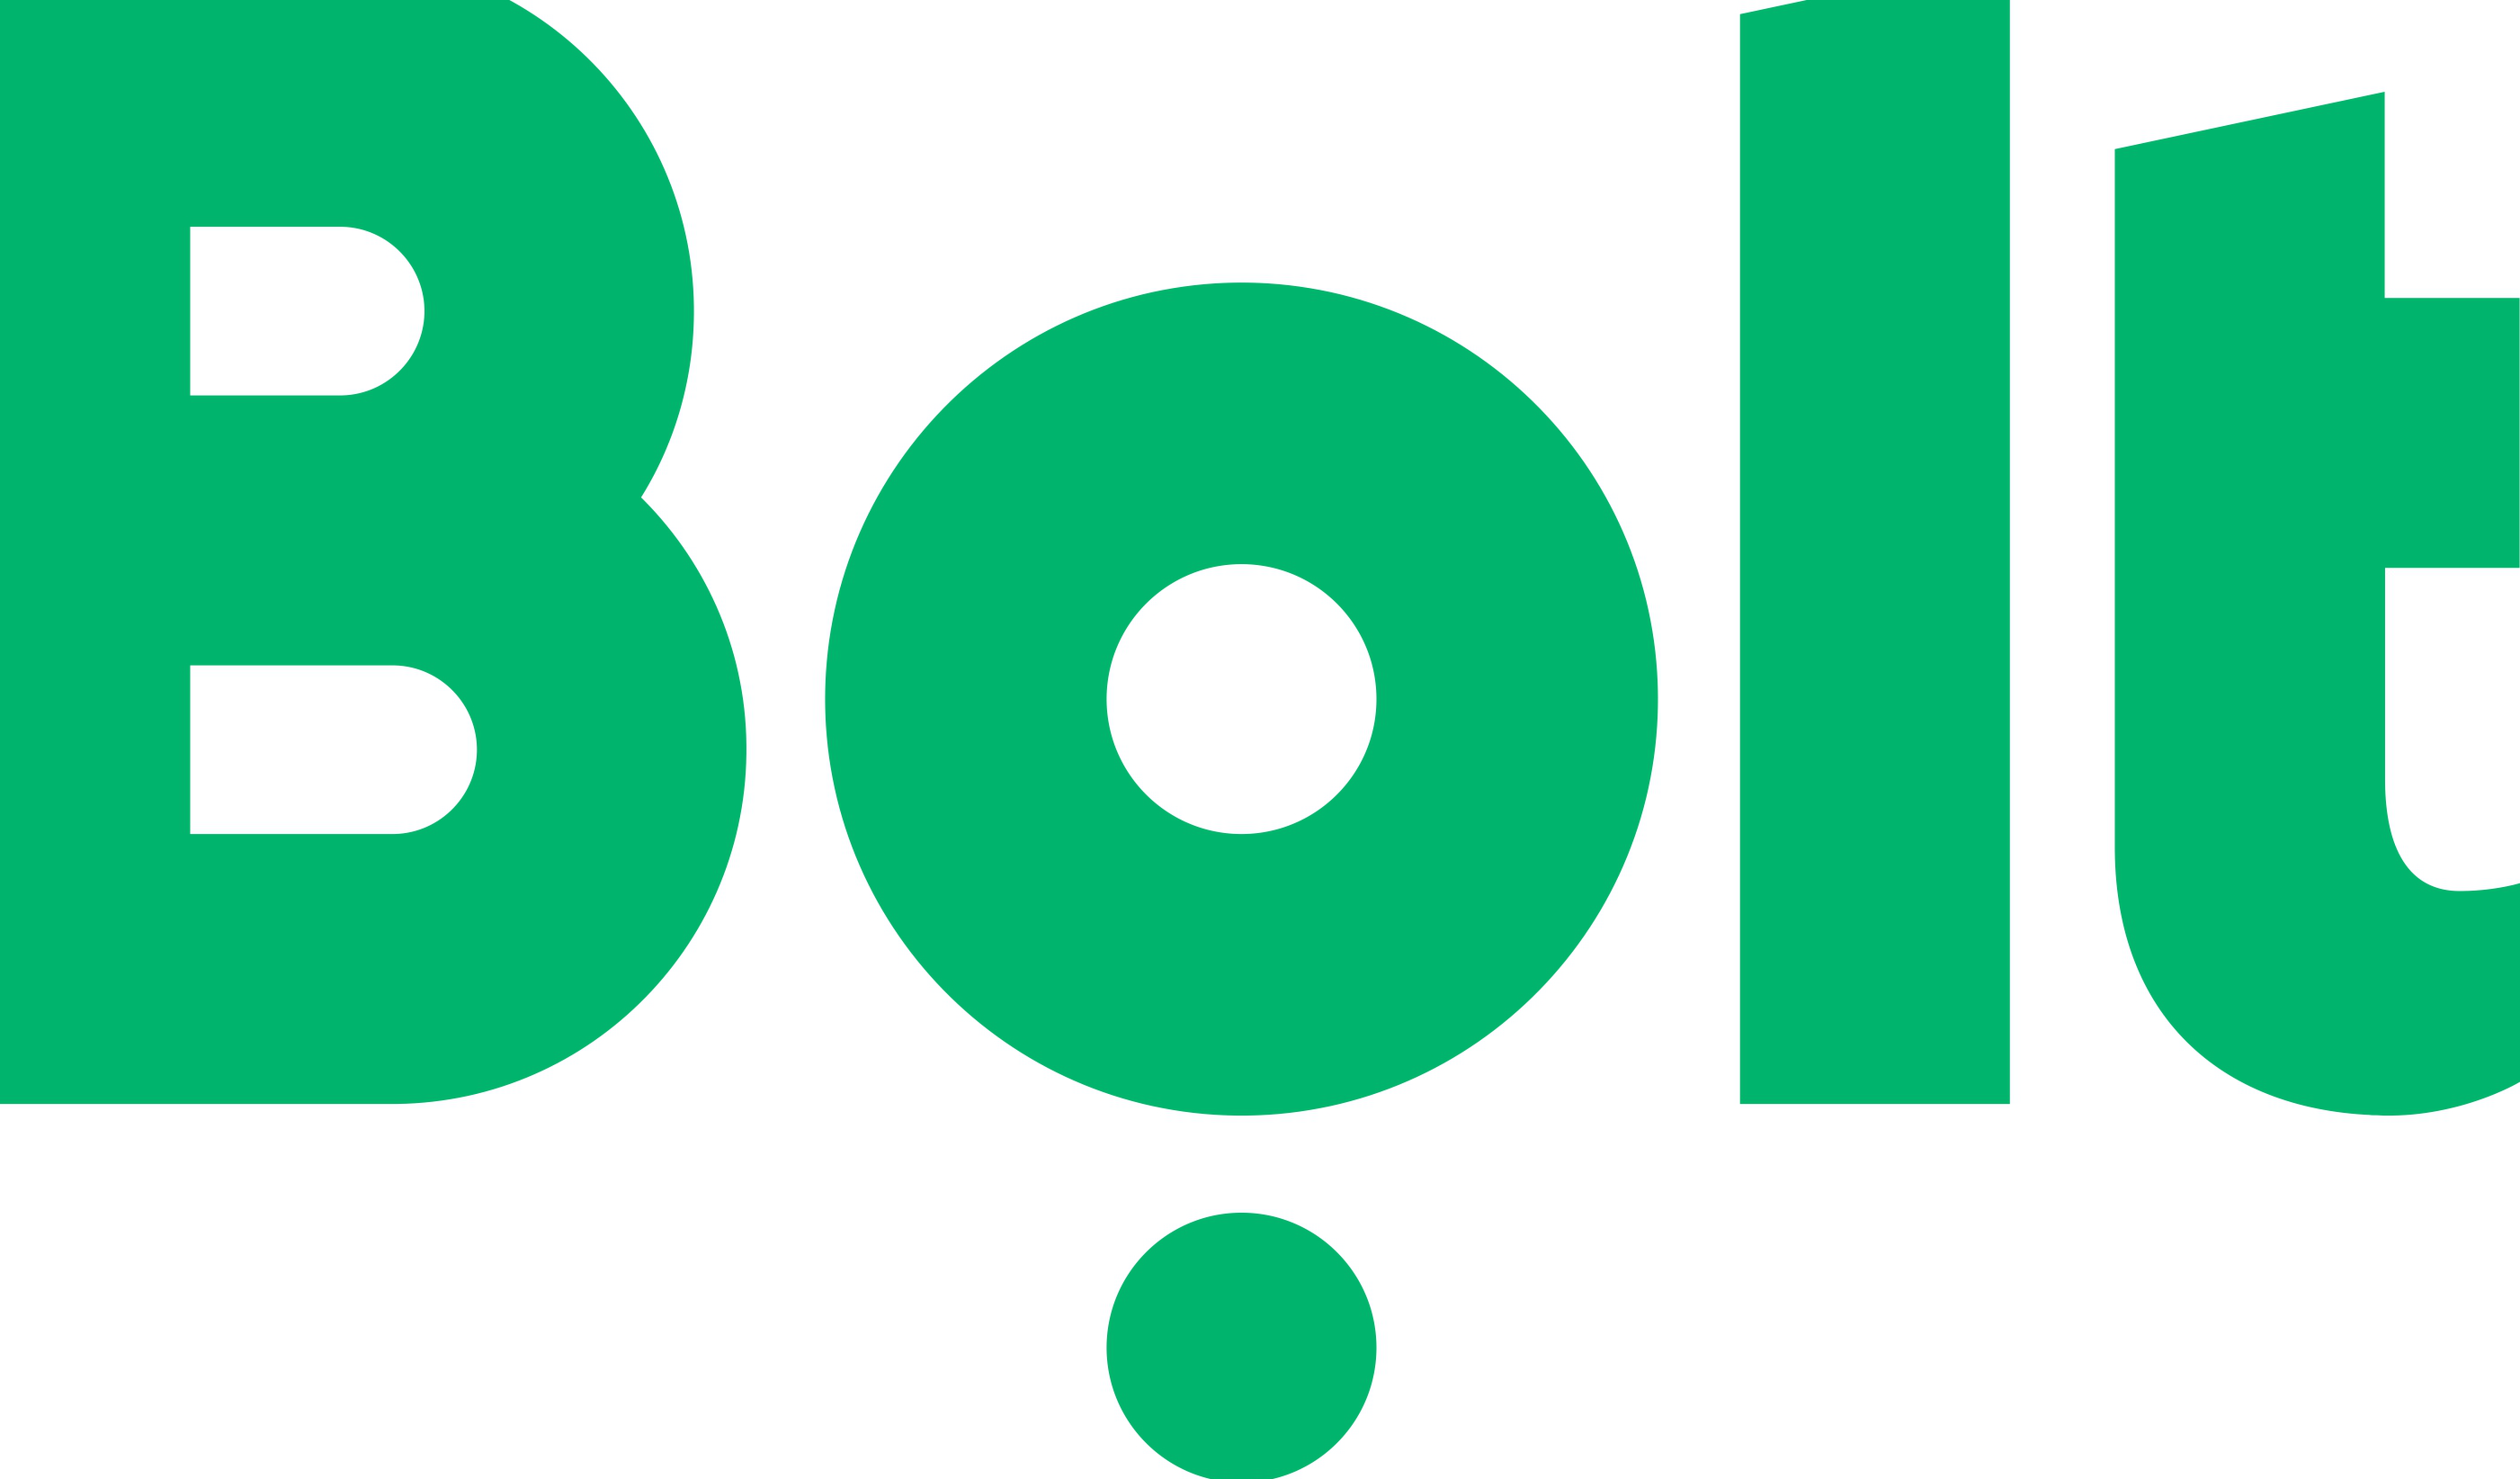 bolt_logo_green_cmyk_page-0001 (1)